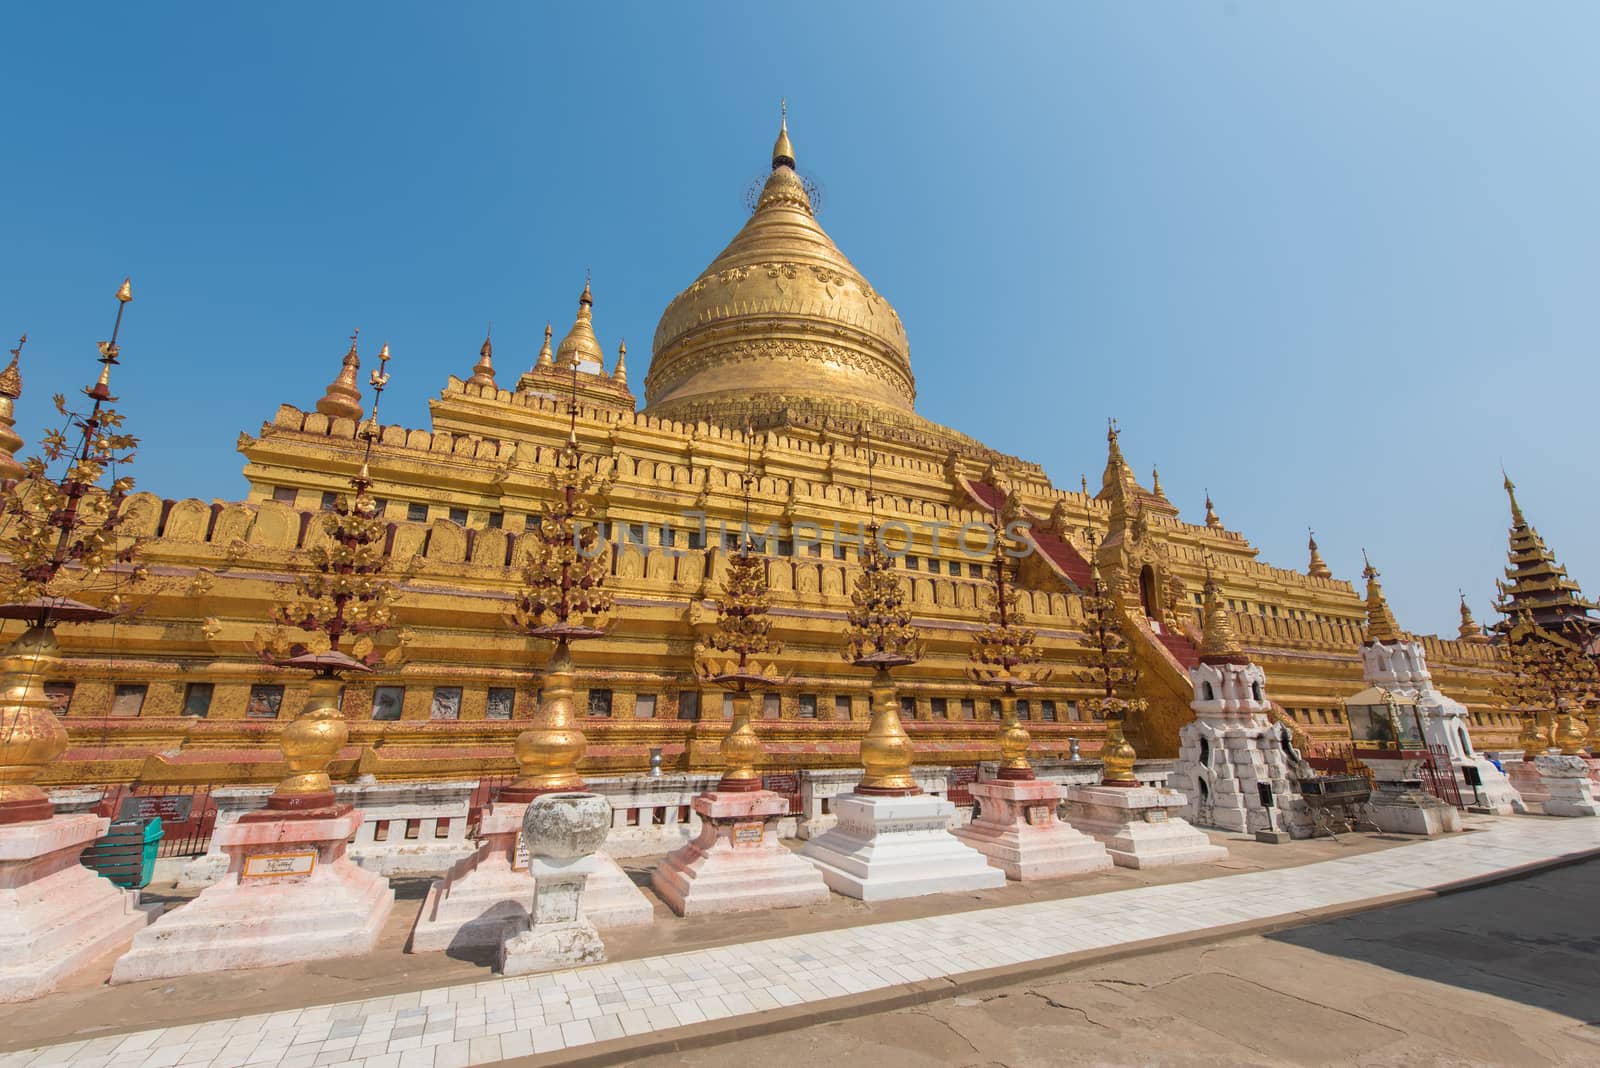 Shwezigon pagoda in Bagan, Myanmar